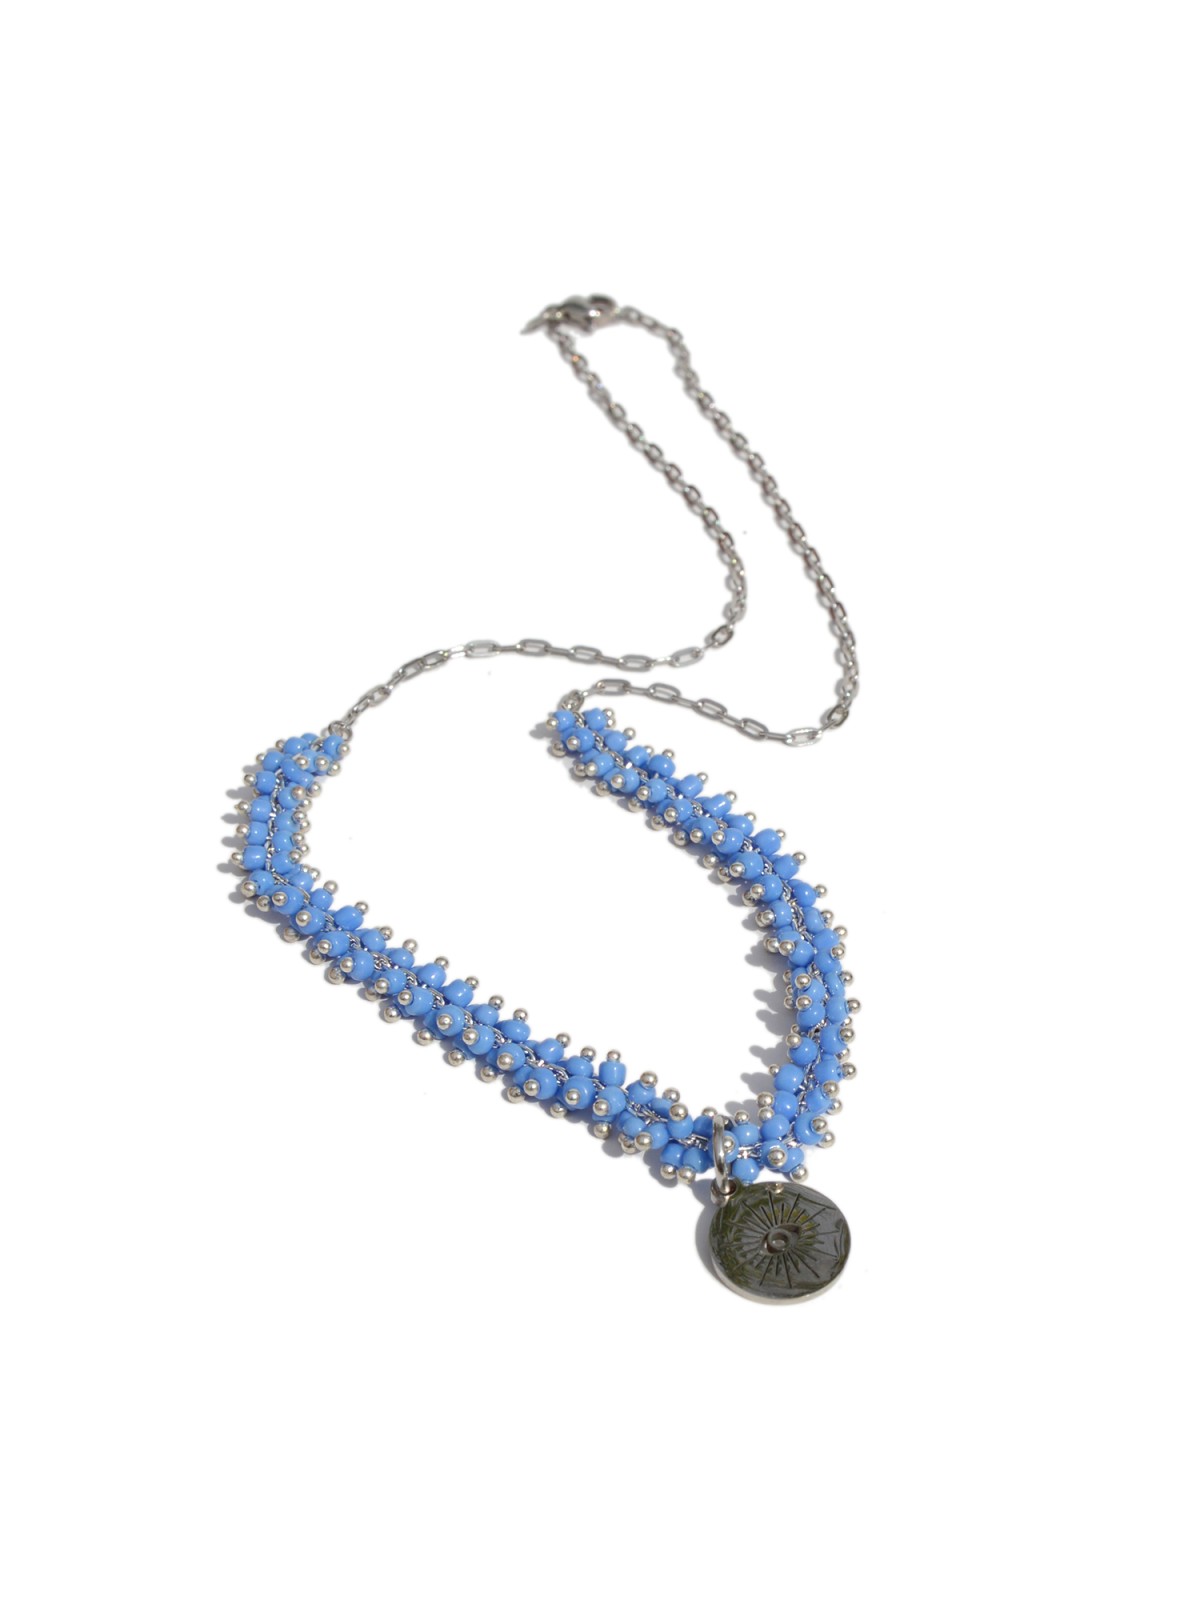 Malaje Handmade for San Fabrizzio Hathor Necklace